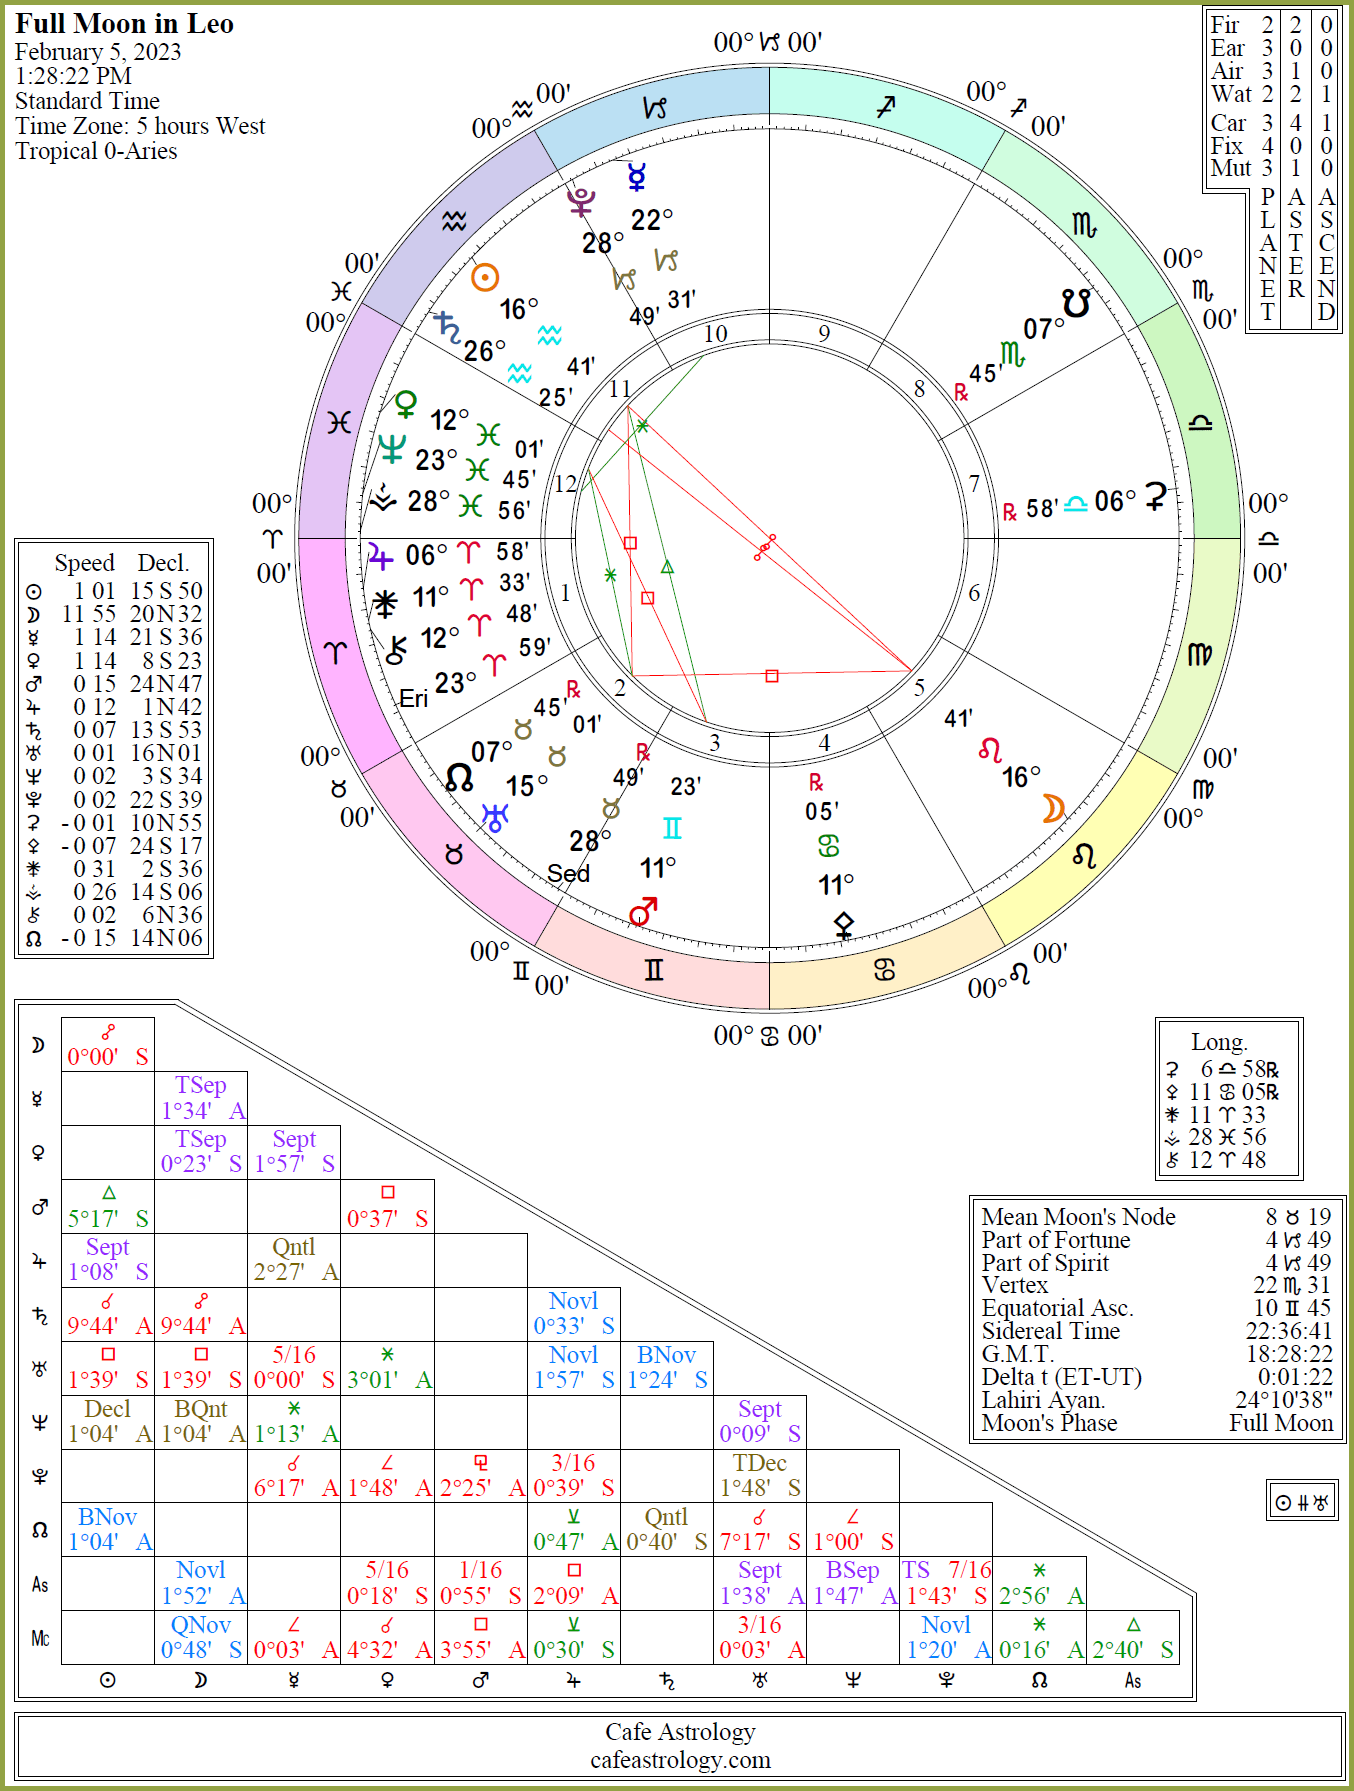 Full Moon on February 5, 2023 Cafe Astrology